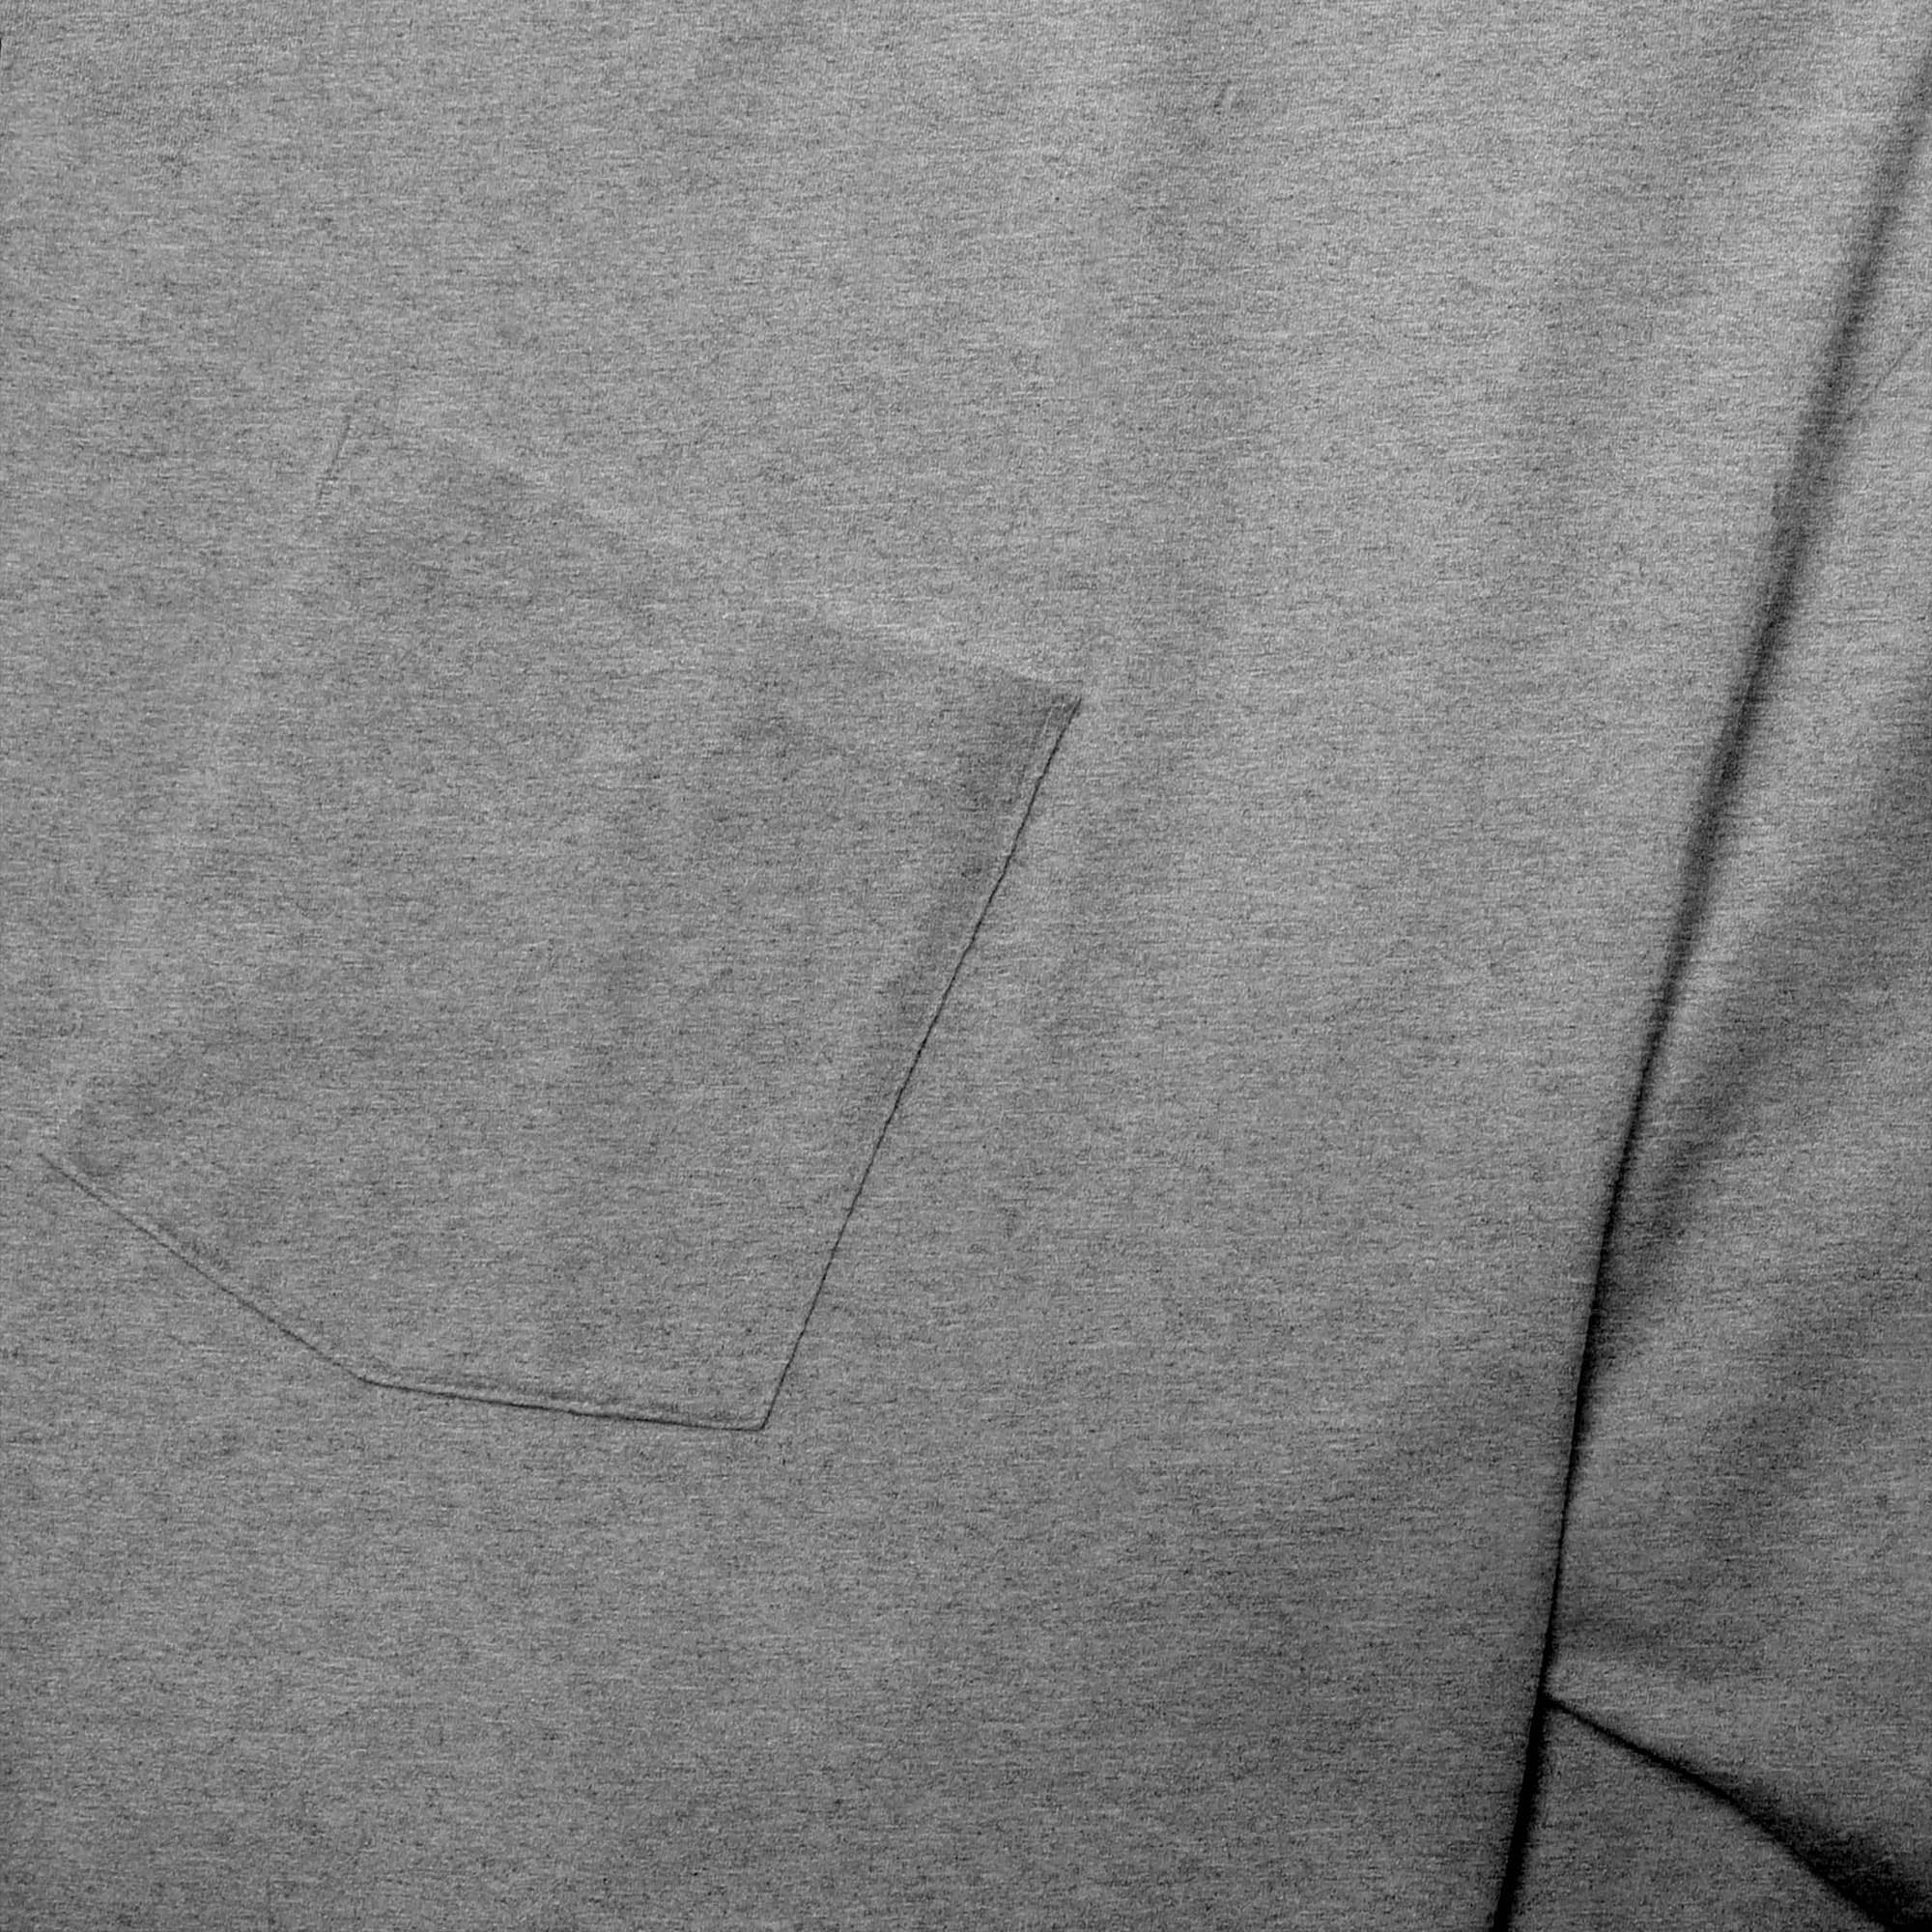 pocket tee_pocket tee shirts_comfort colors pocket tee_short sleeve pocket tee_tshirt_t shirts for men_tee shirts_cheap t shirts_t shirt designs_plain t shirts_Carbon Gray